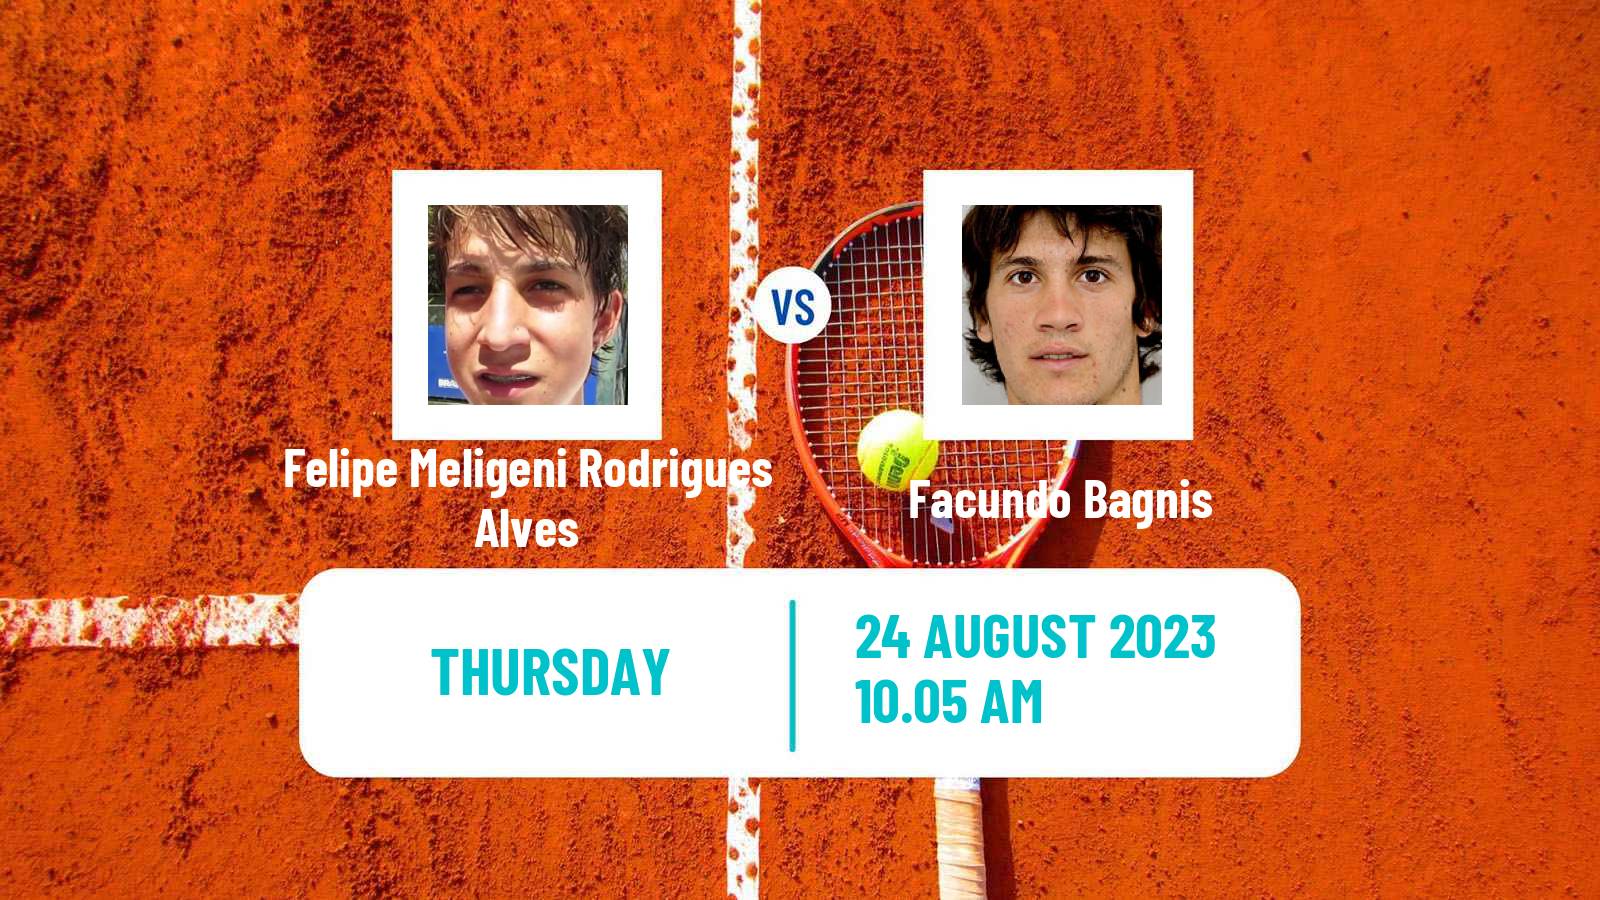 Tennis ATP US Open Felipe Meligeni Rodrigues Alves - Facundo Bagnis